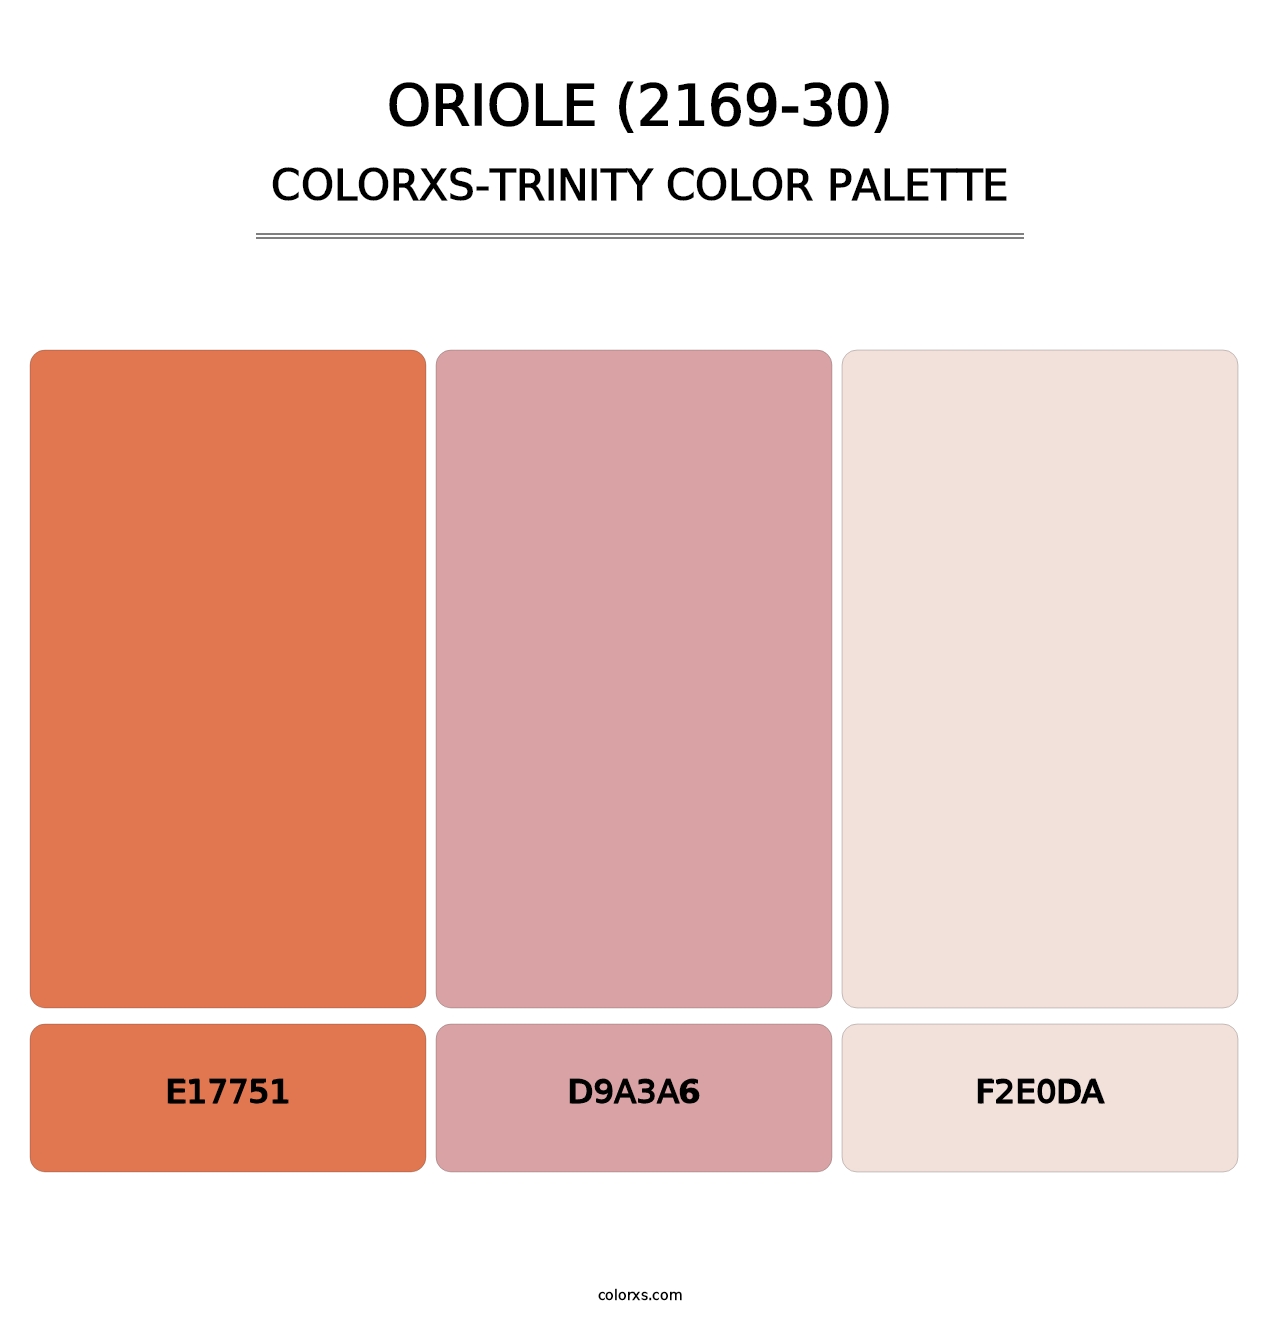 Oriole (2169-30) - Colorxs Trinity Palette